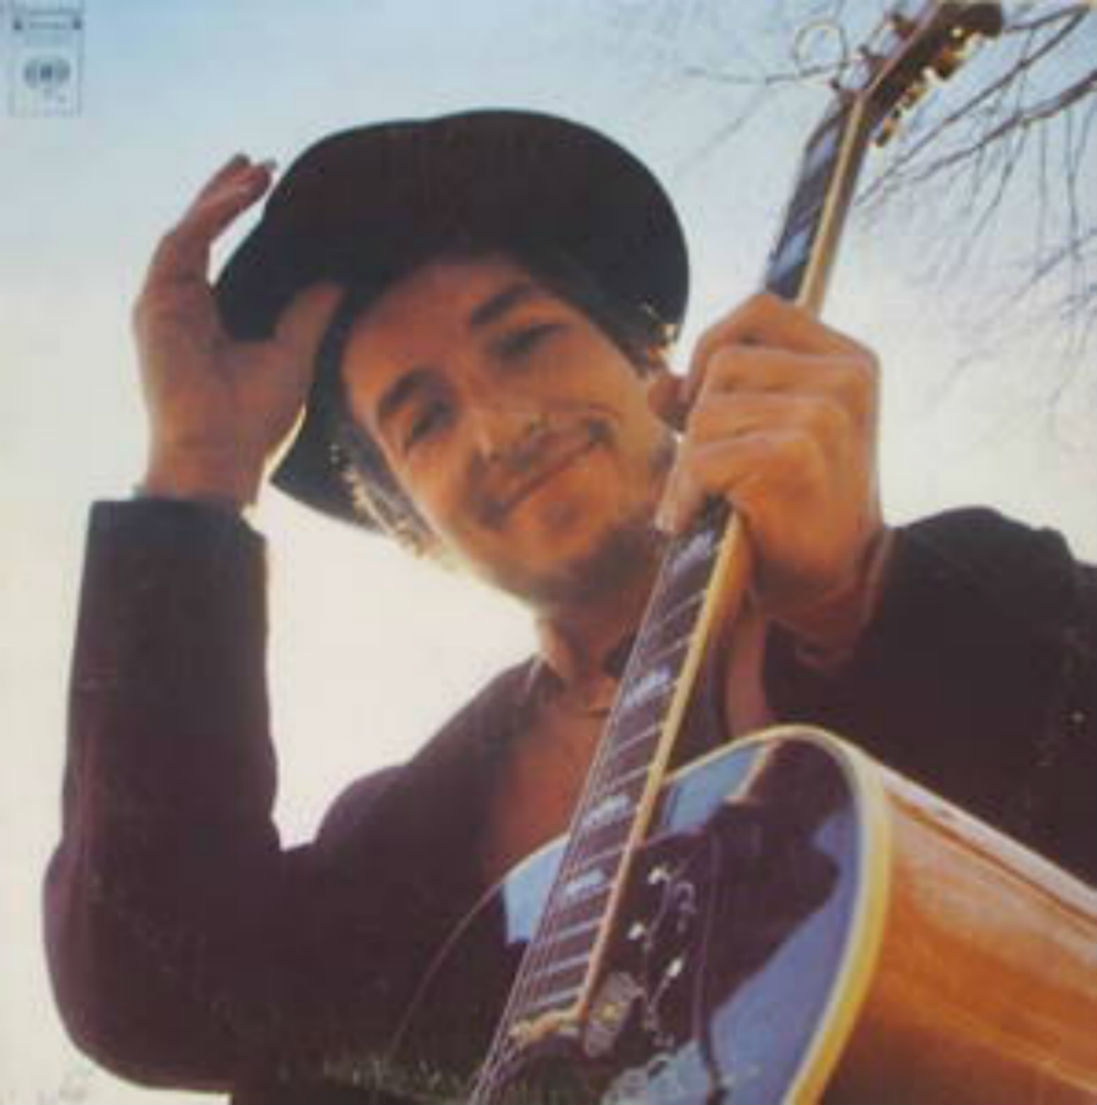 Bob Dylan / Nashville Skyline